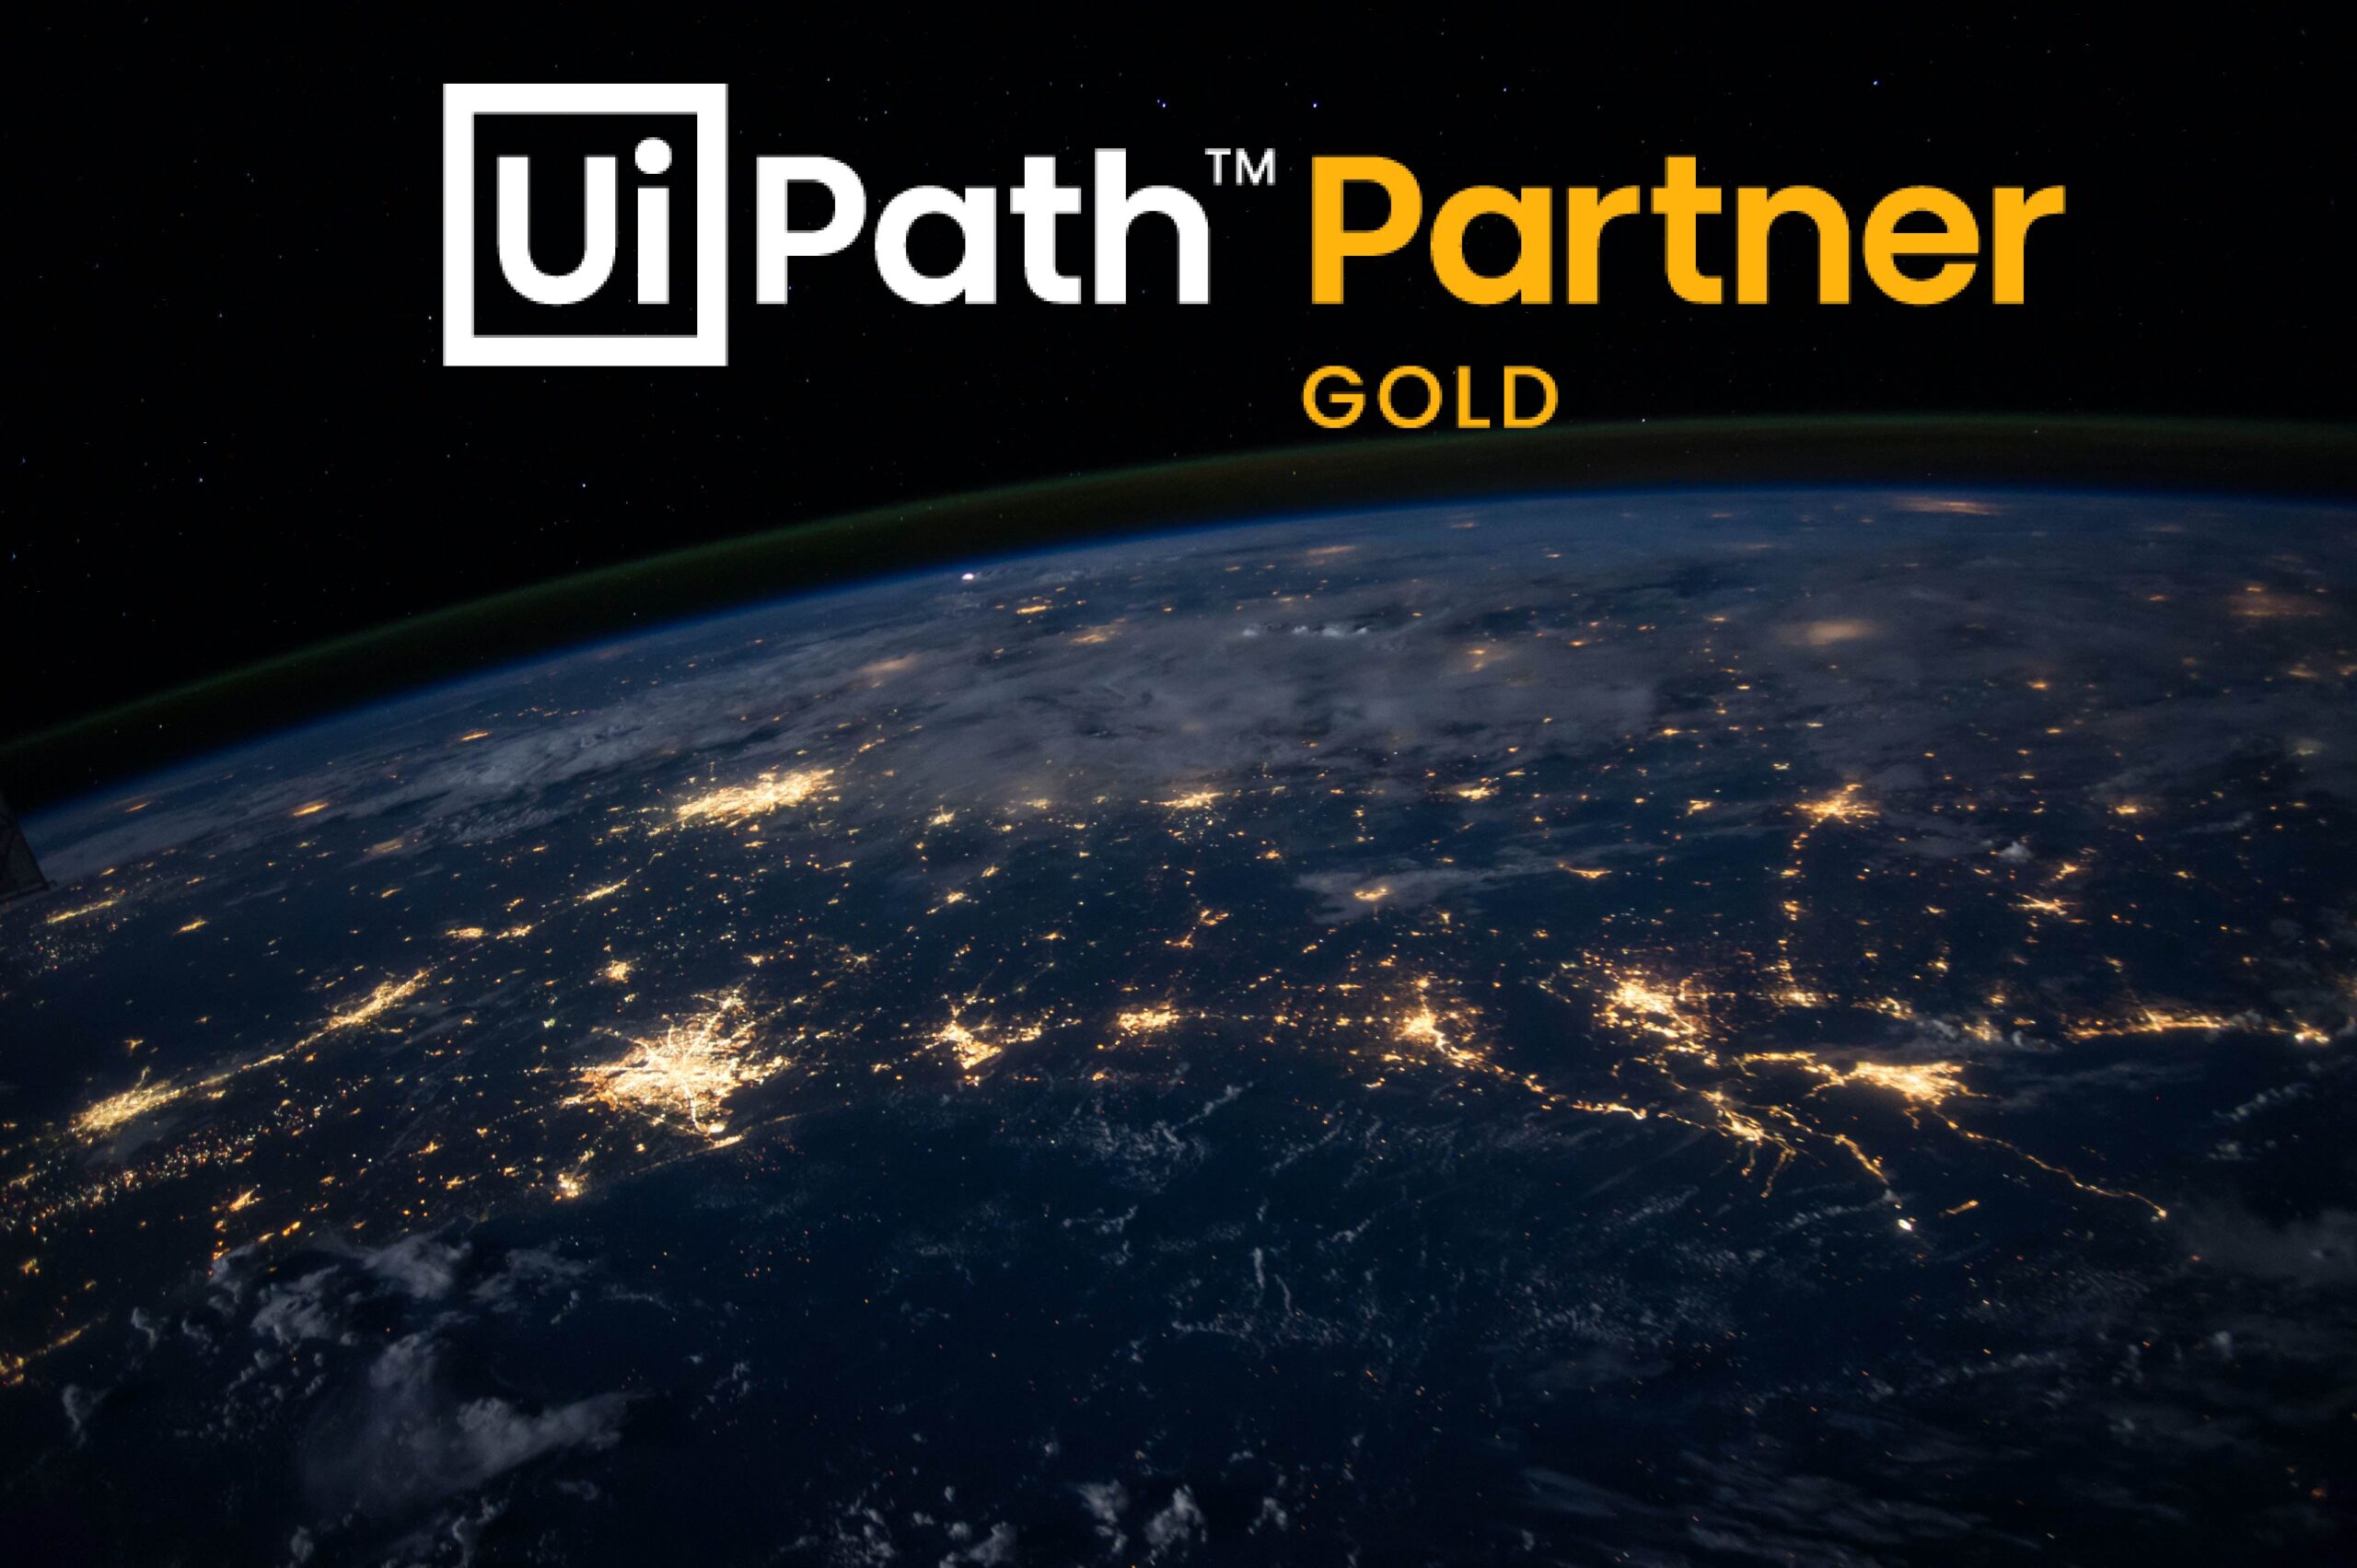 uipath gold partner scaled